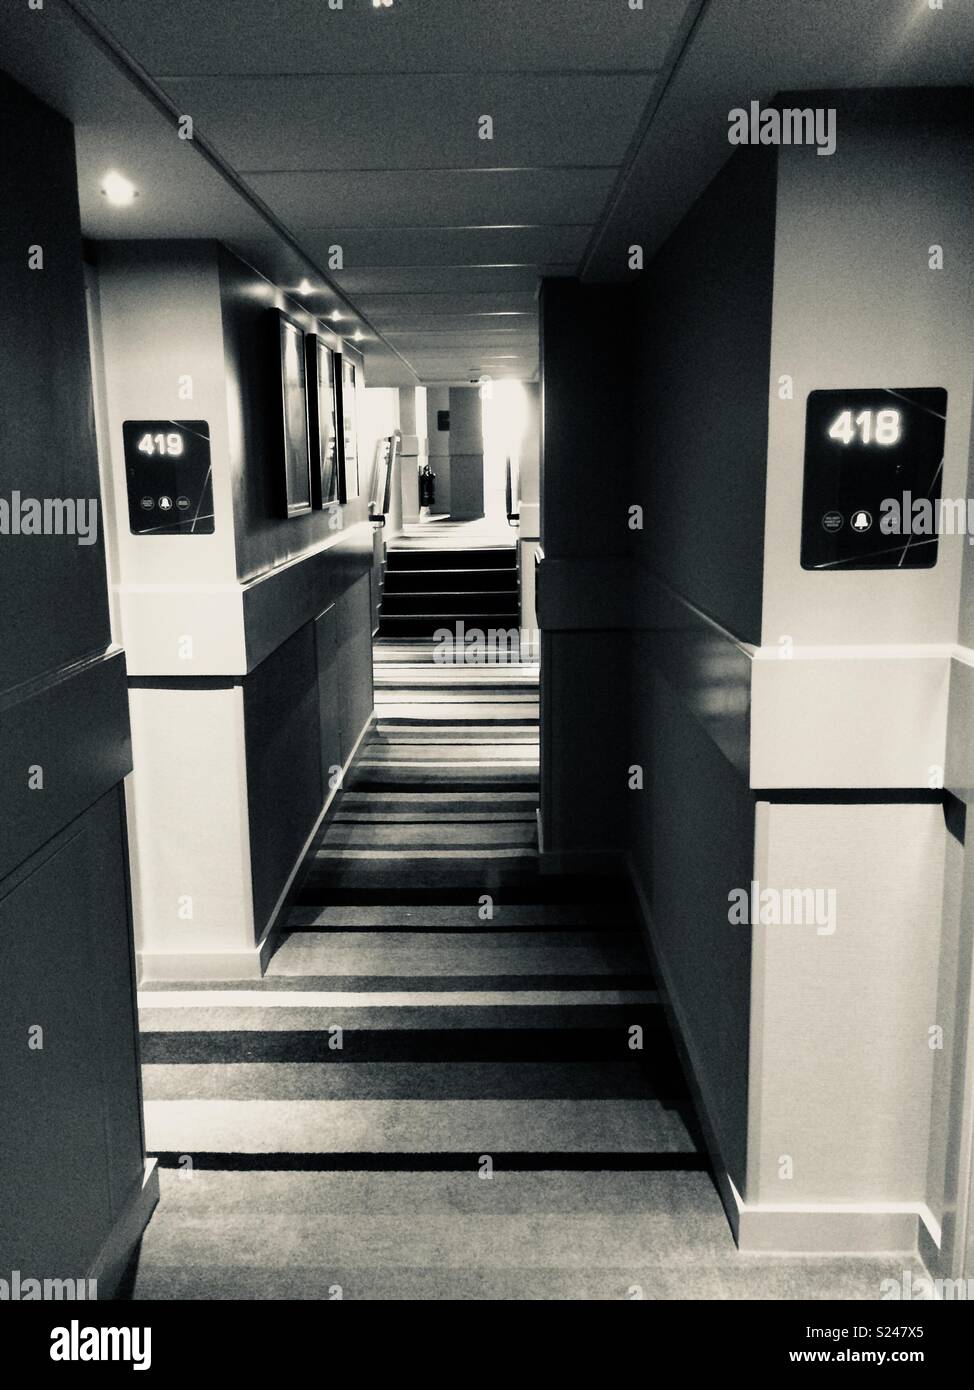 Hotel corridor black and white Stock Photo